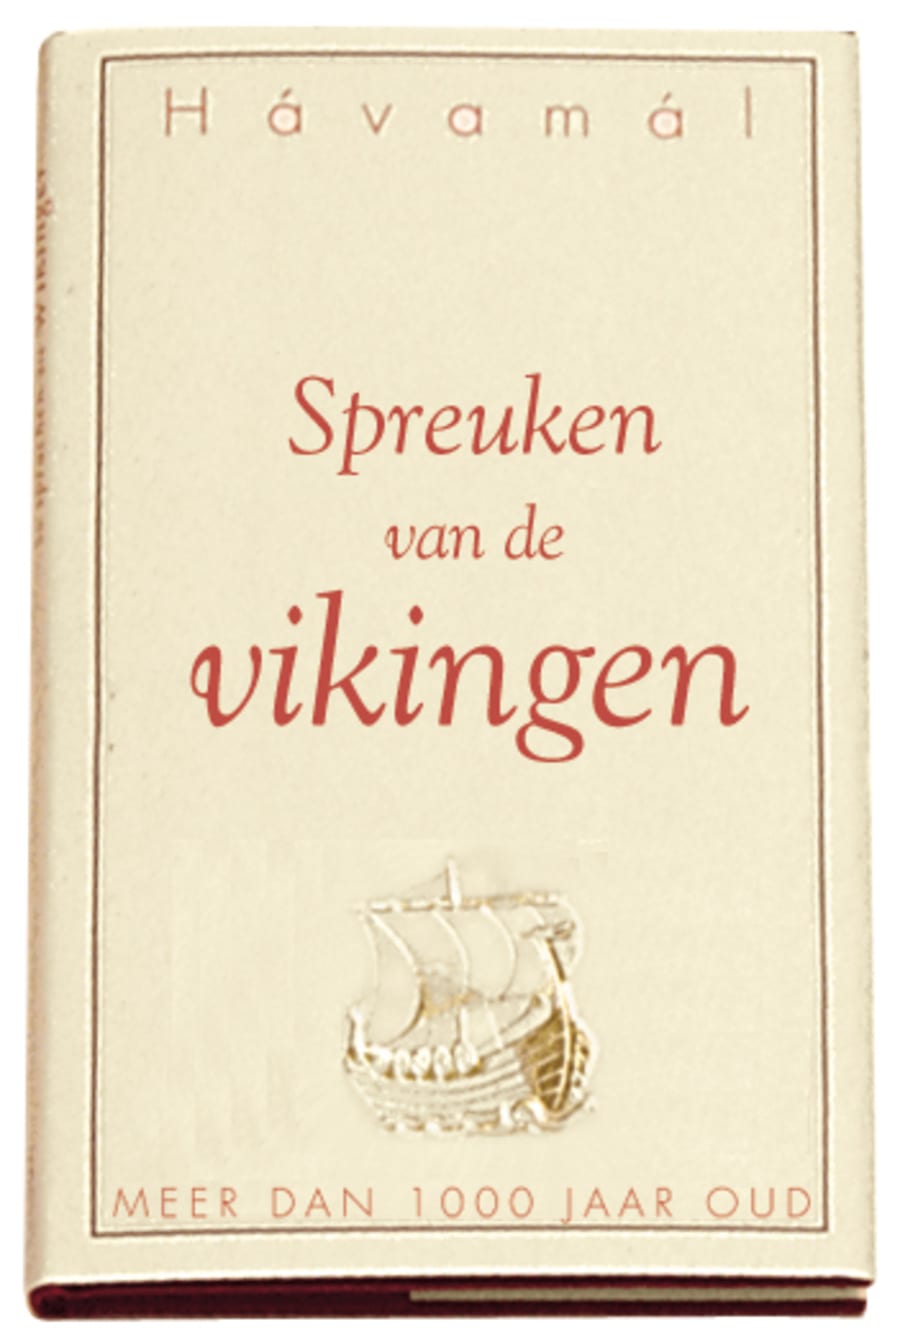 Spreuken van de Vikingen - Hávamál